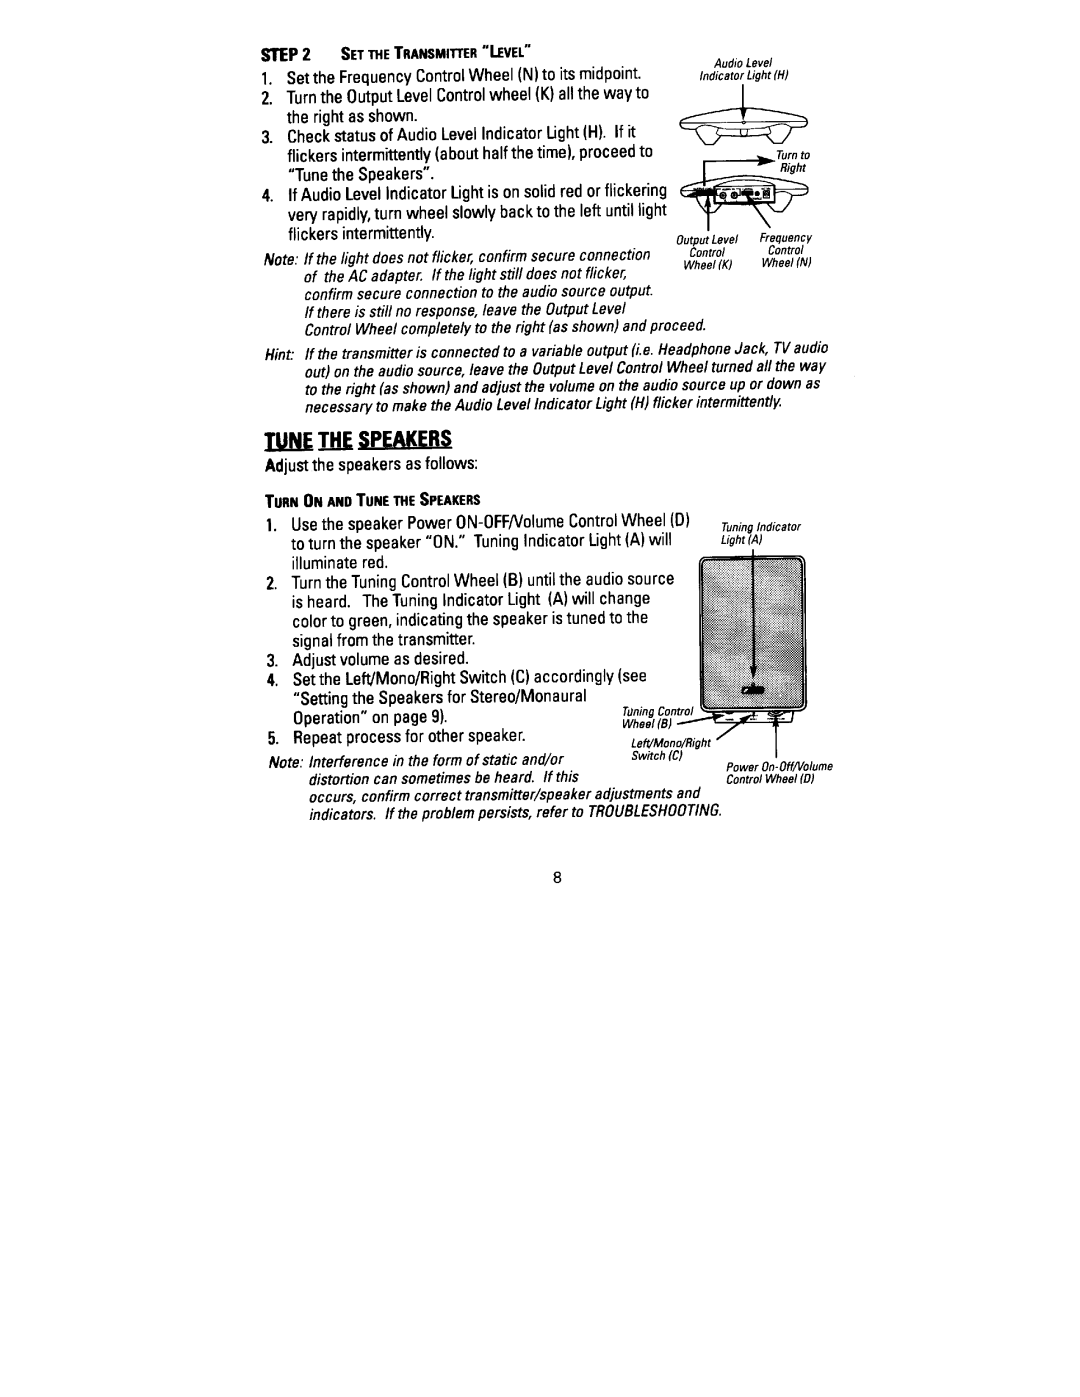 Recoton/Advent AW820 manual 